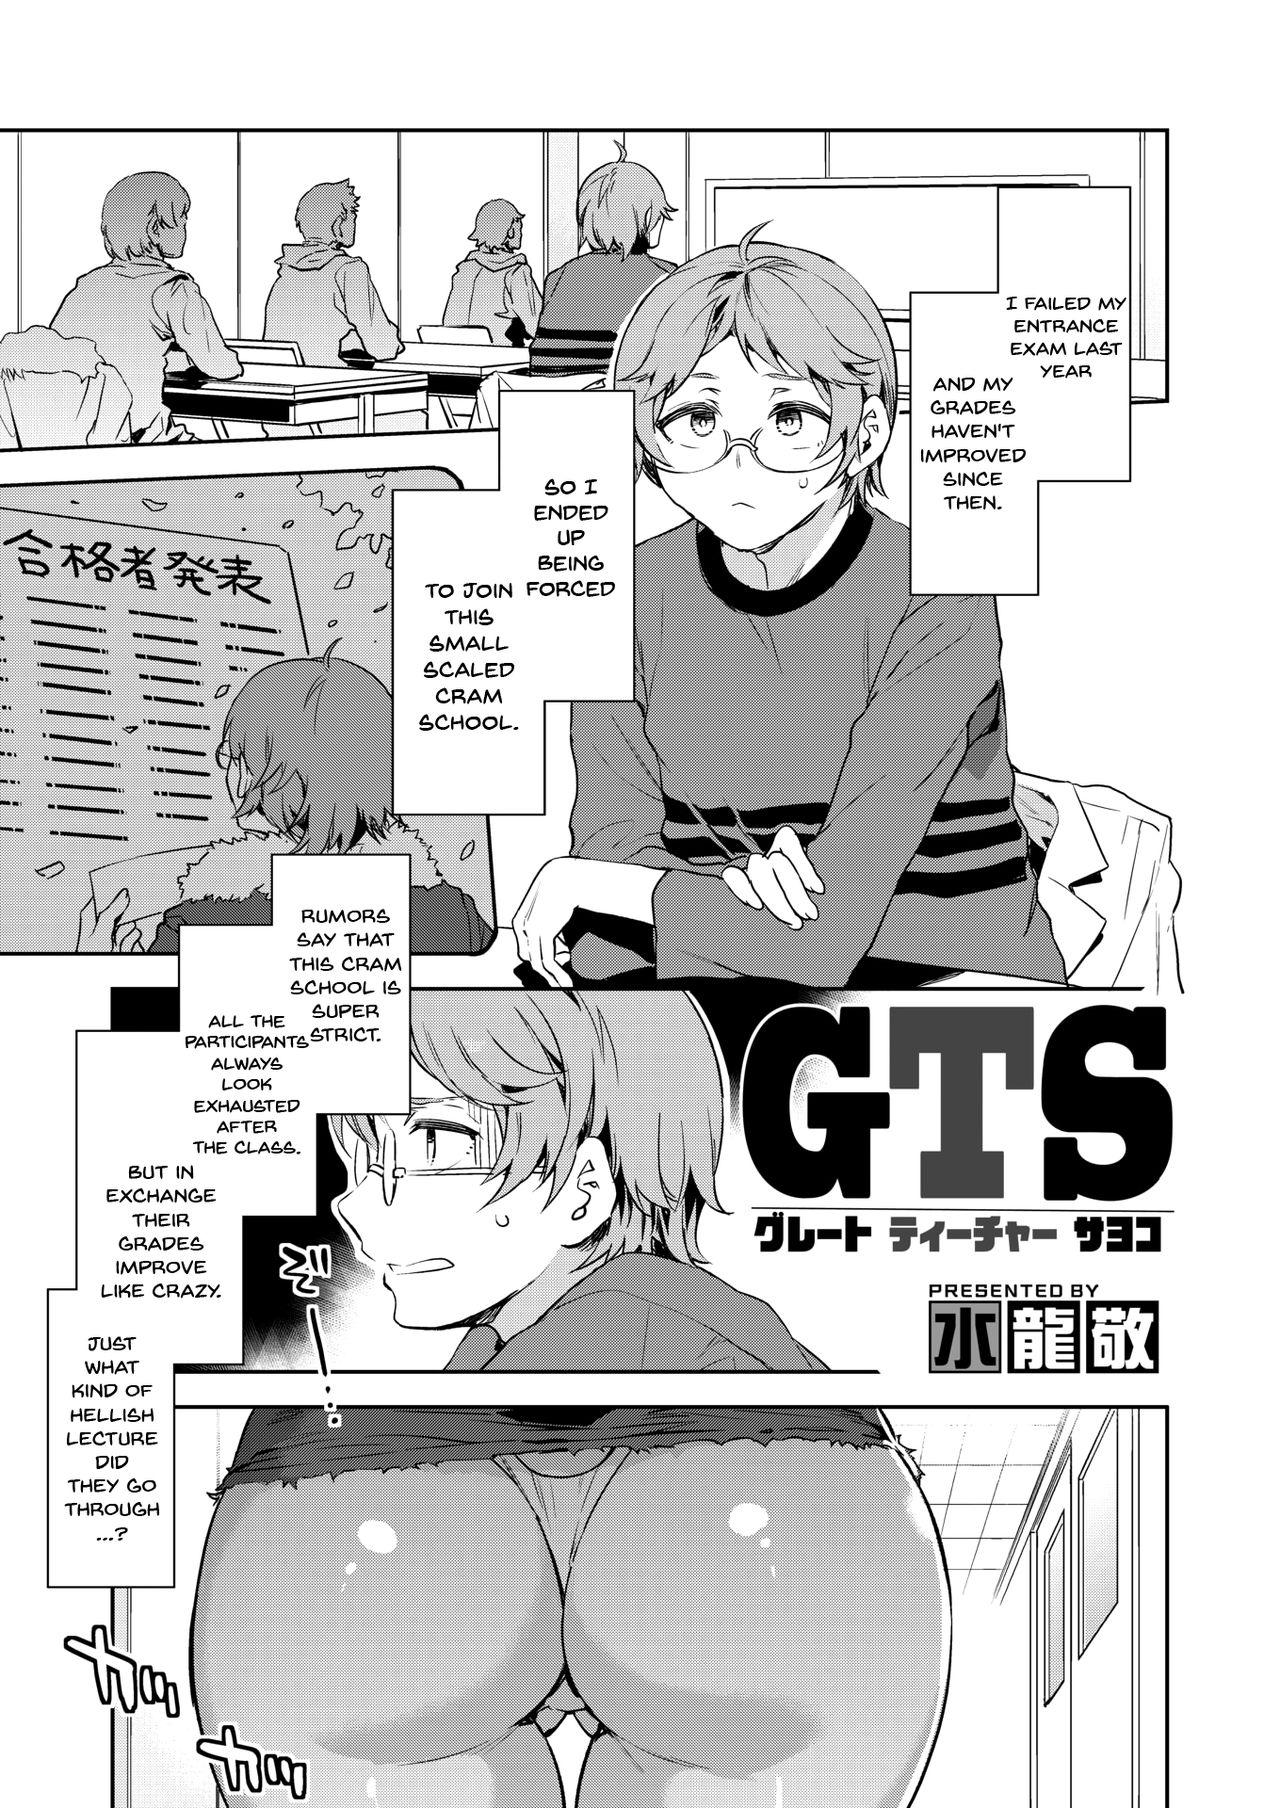 19yo GTS | GTS - Great Teacher Sayoko Screaming - Page 1